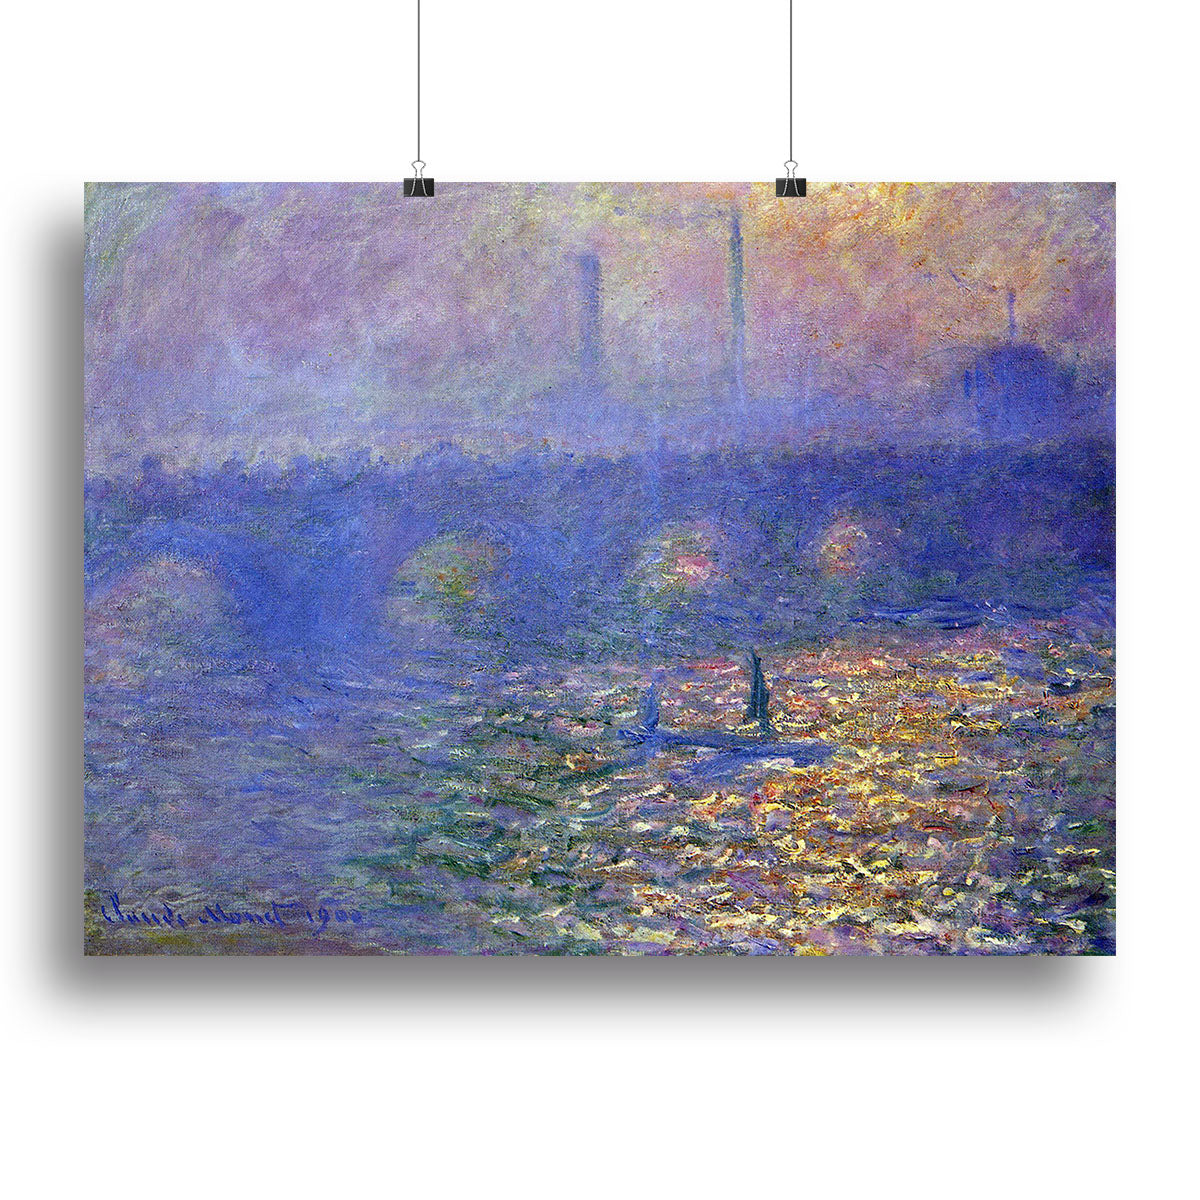 Waterloo Bridge by Monet Canvas Print or Poster - Canvas Art Rocks - 2